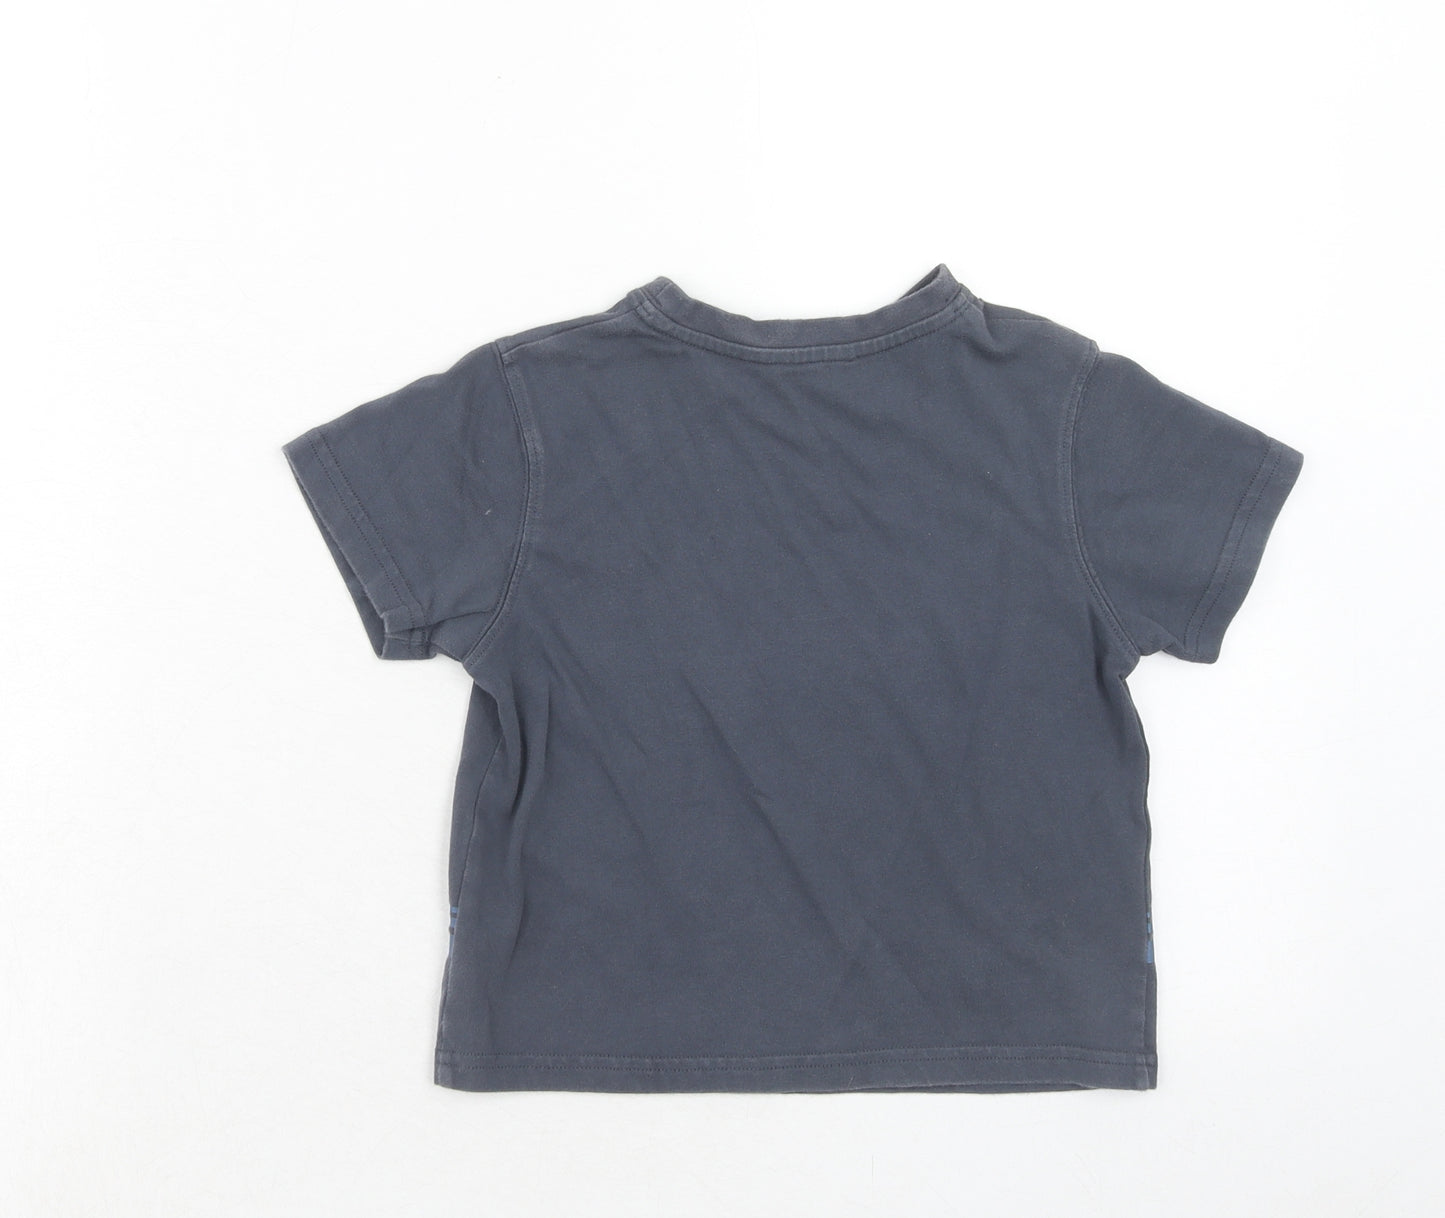 John Lewis Boys Grey Cotton Basic T-Shirt Size 2-3 Years Round Neck Pullover